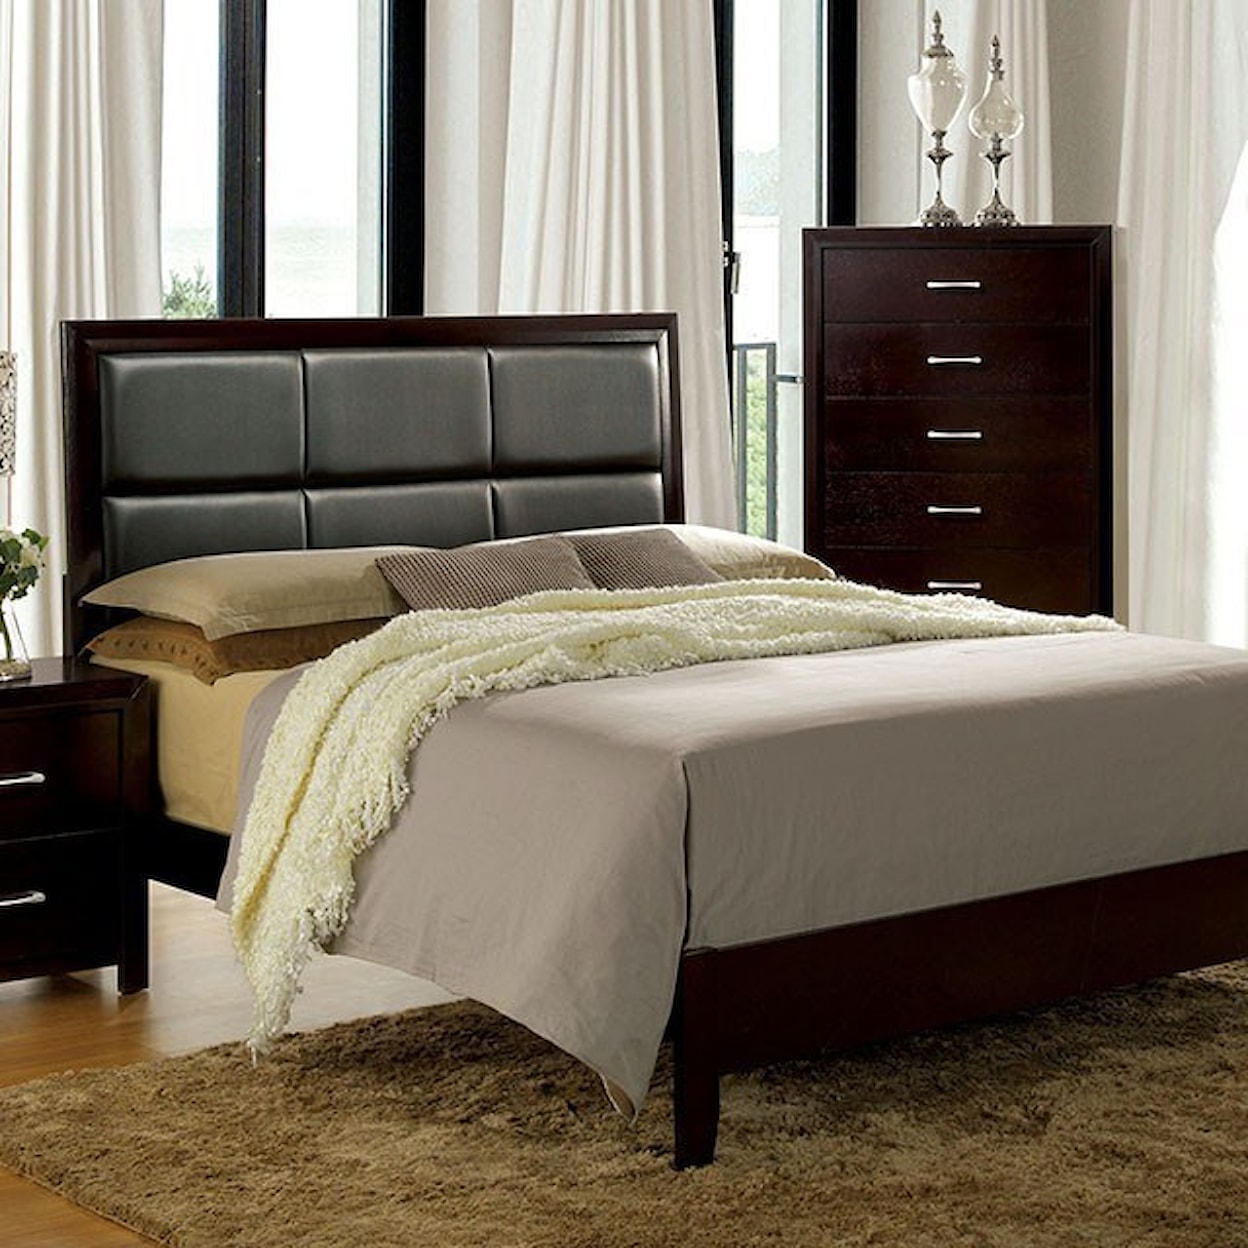 Furniture of America Janine Queen Bed